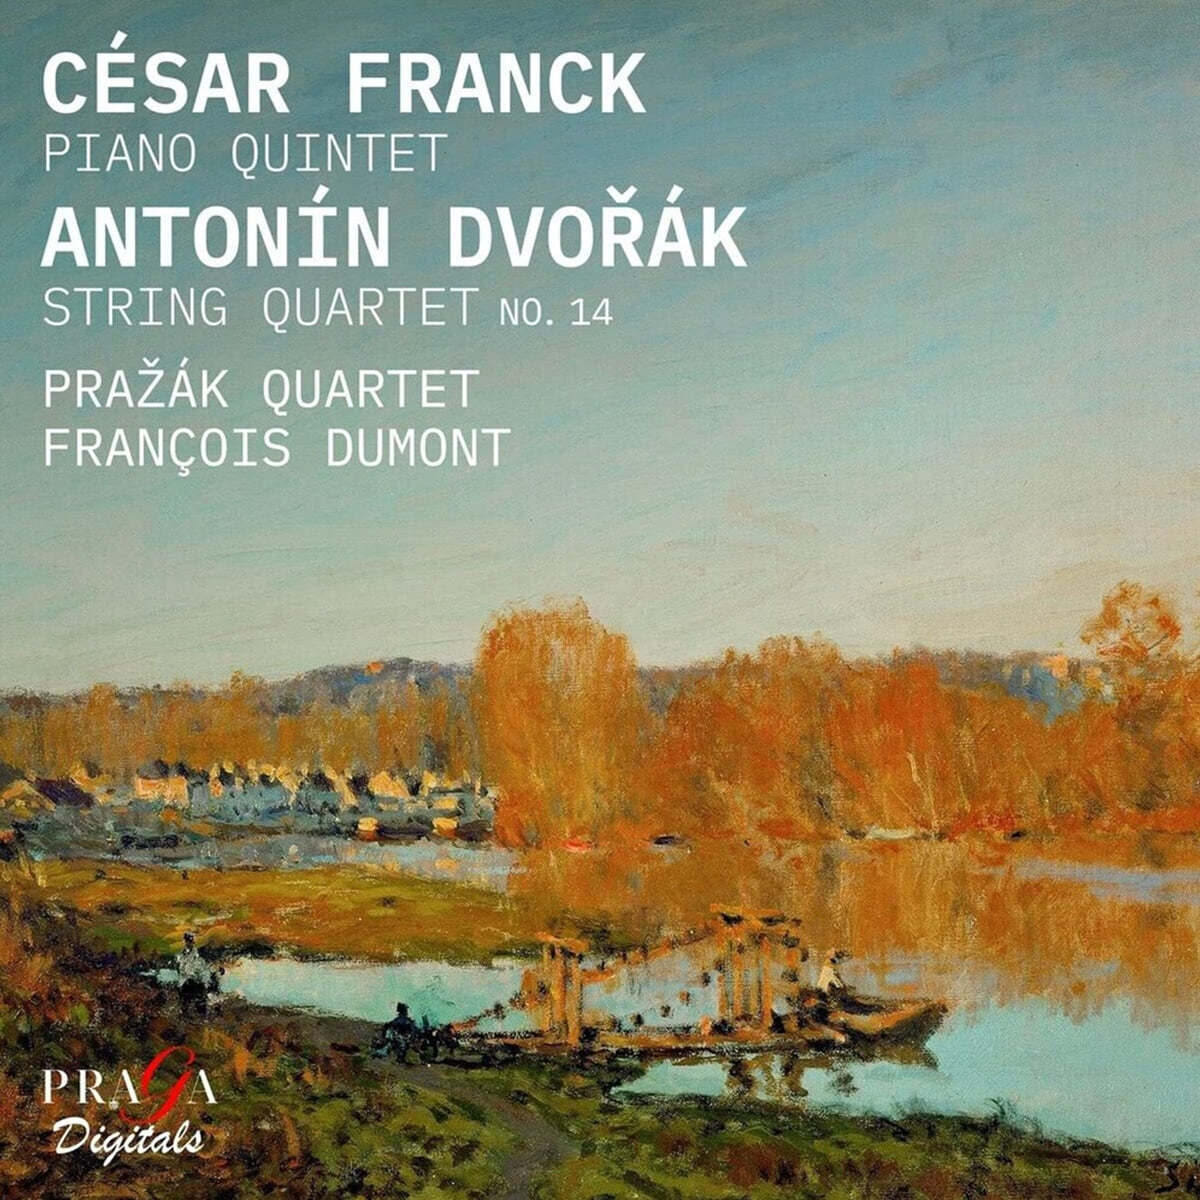 Prazak Quartet 프랑크: 피아노 5중주 / 드보르작: 현악 4중주 14번 (Franck: Piano Quintet Op.14 / Dvo?ak: String Quartet Op.105)